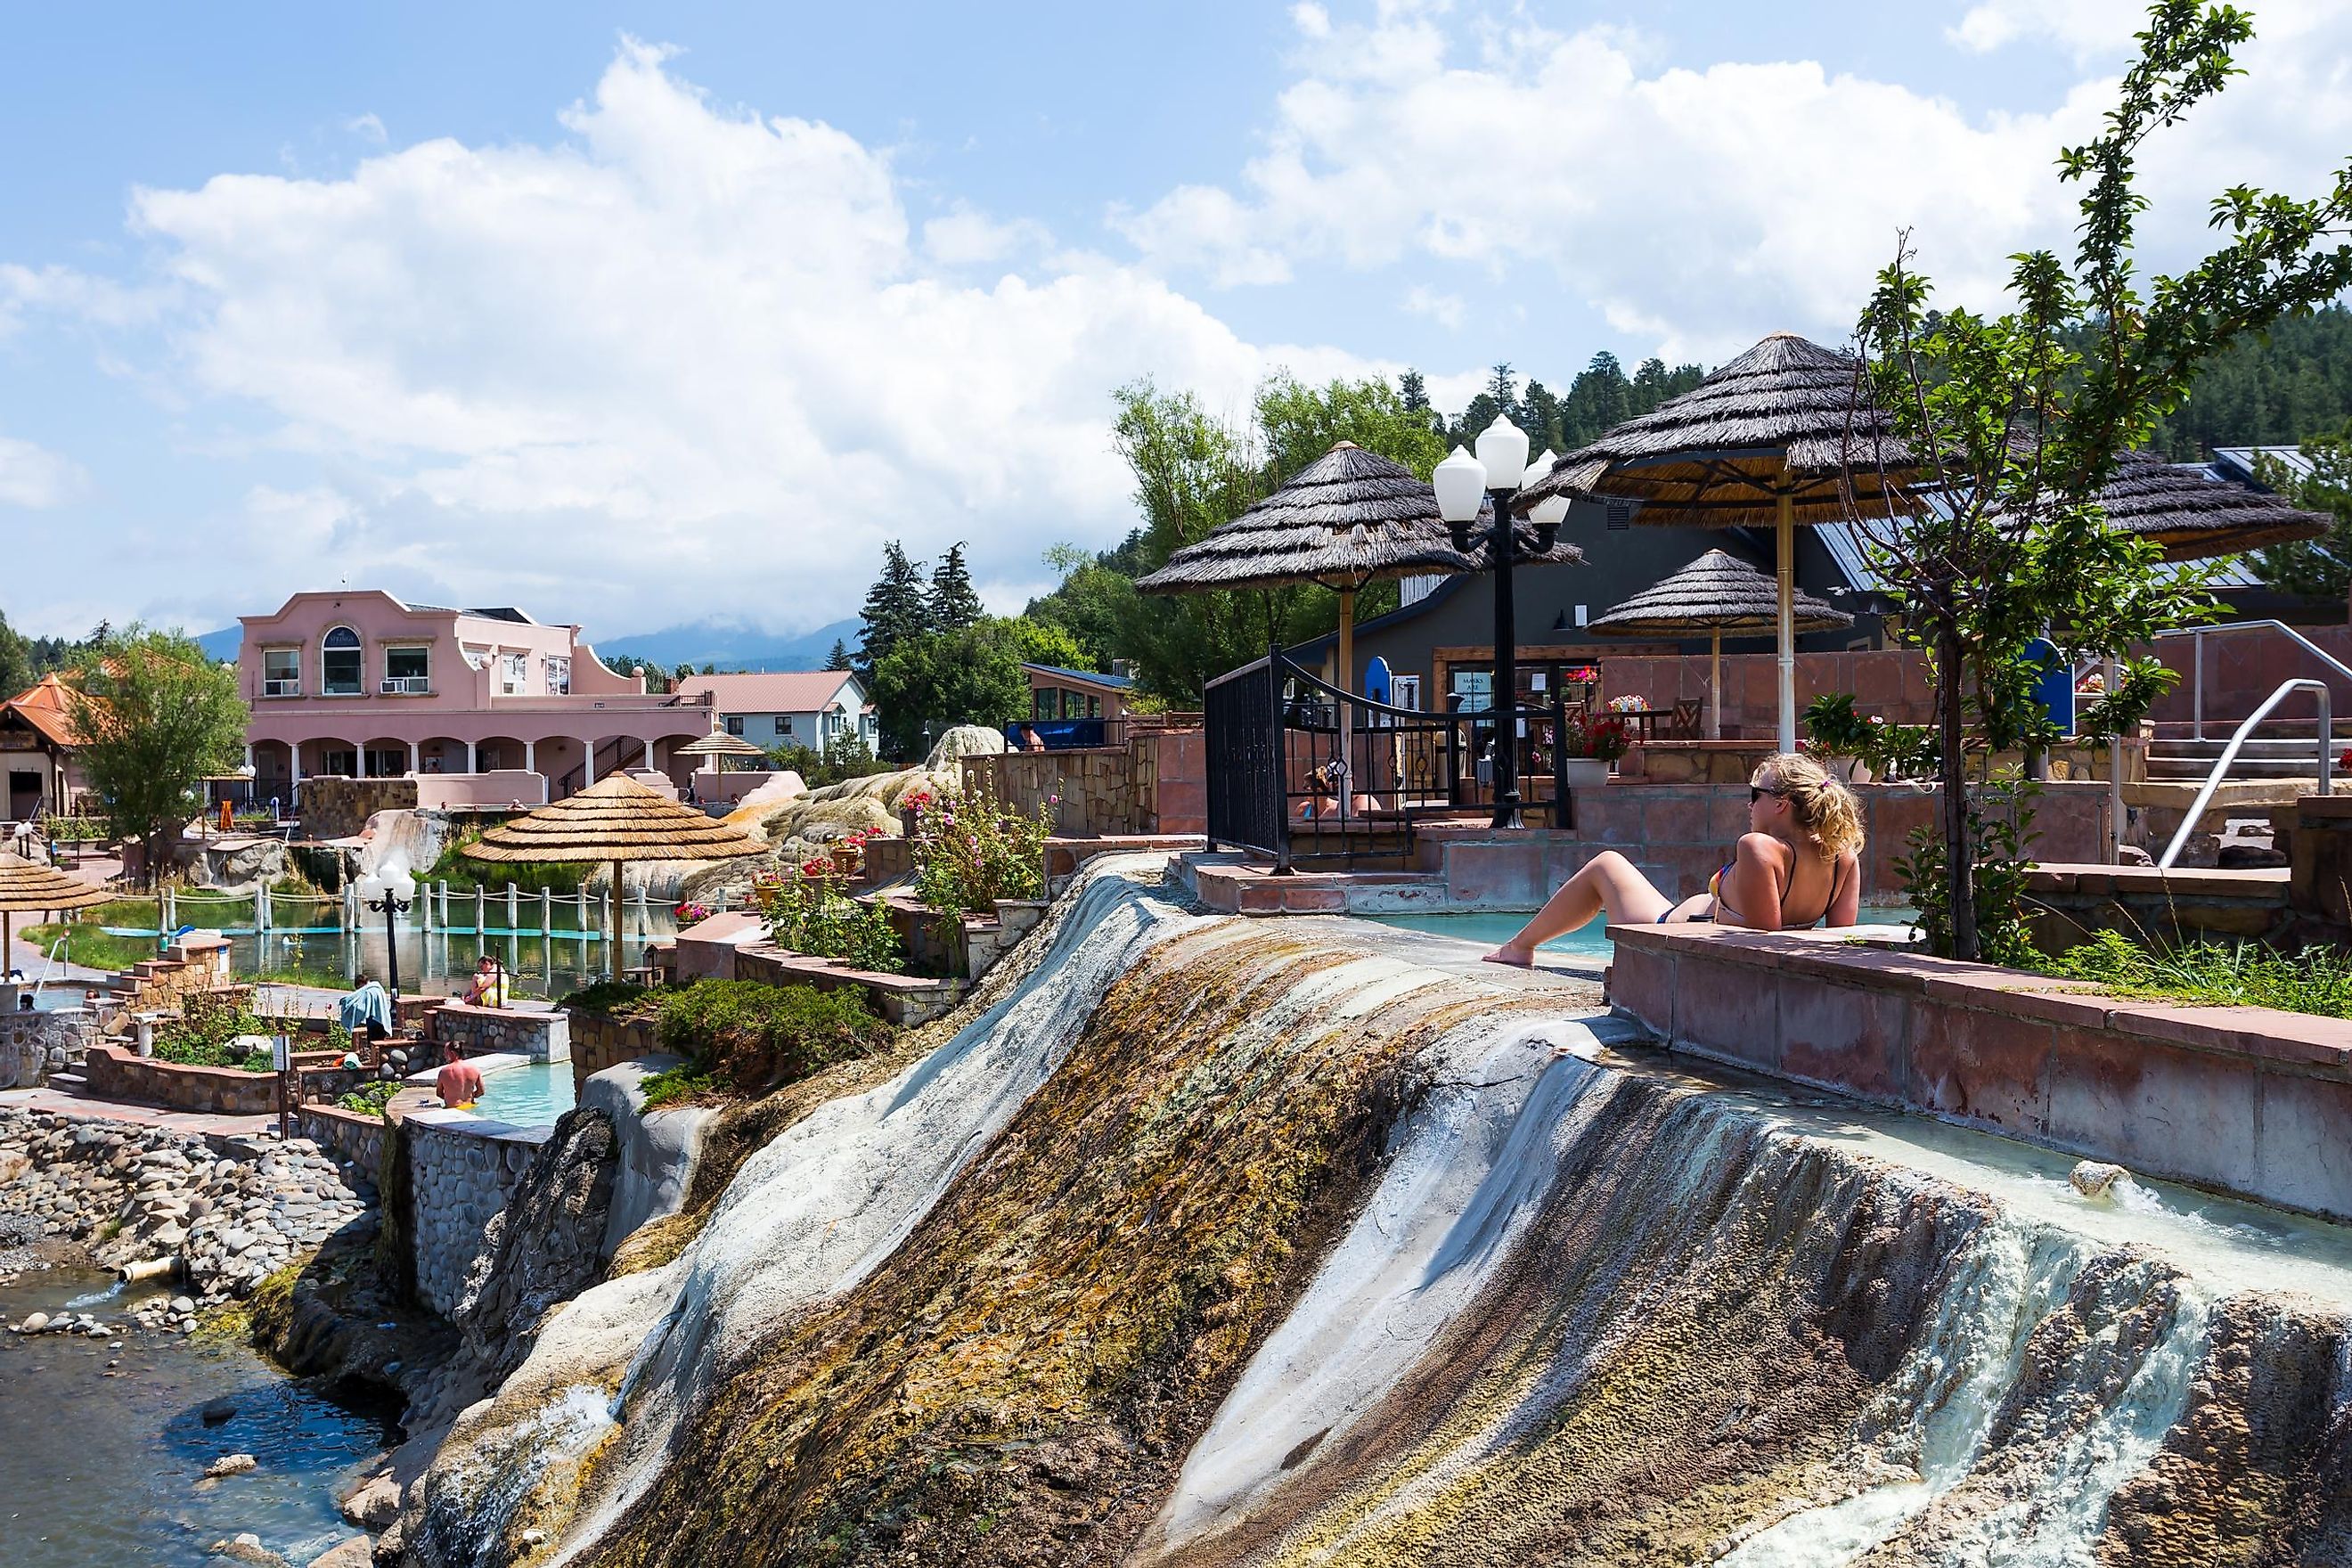 Pagosa Springs, Colorado, USA - August 19th, 2021: People relaxing in popular resort the Springs, San Juan river hot springs